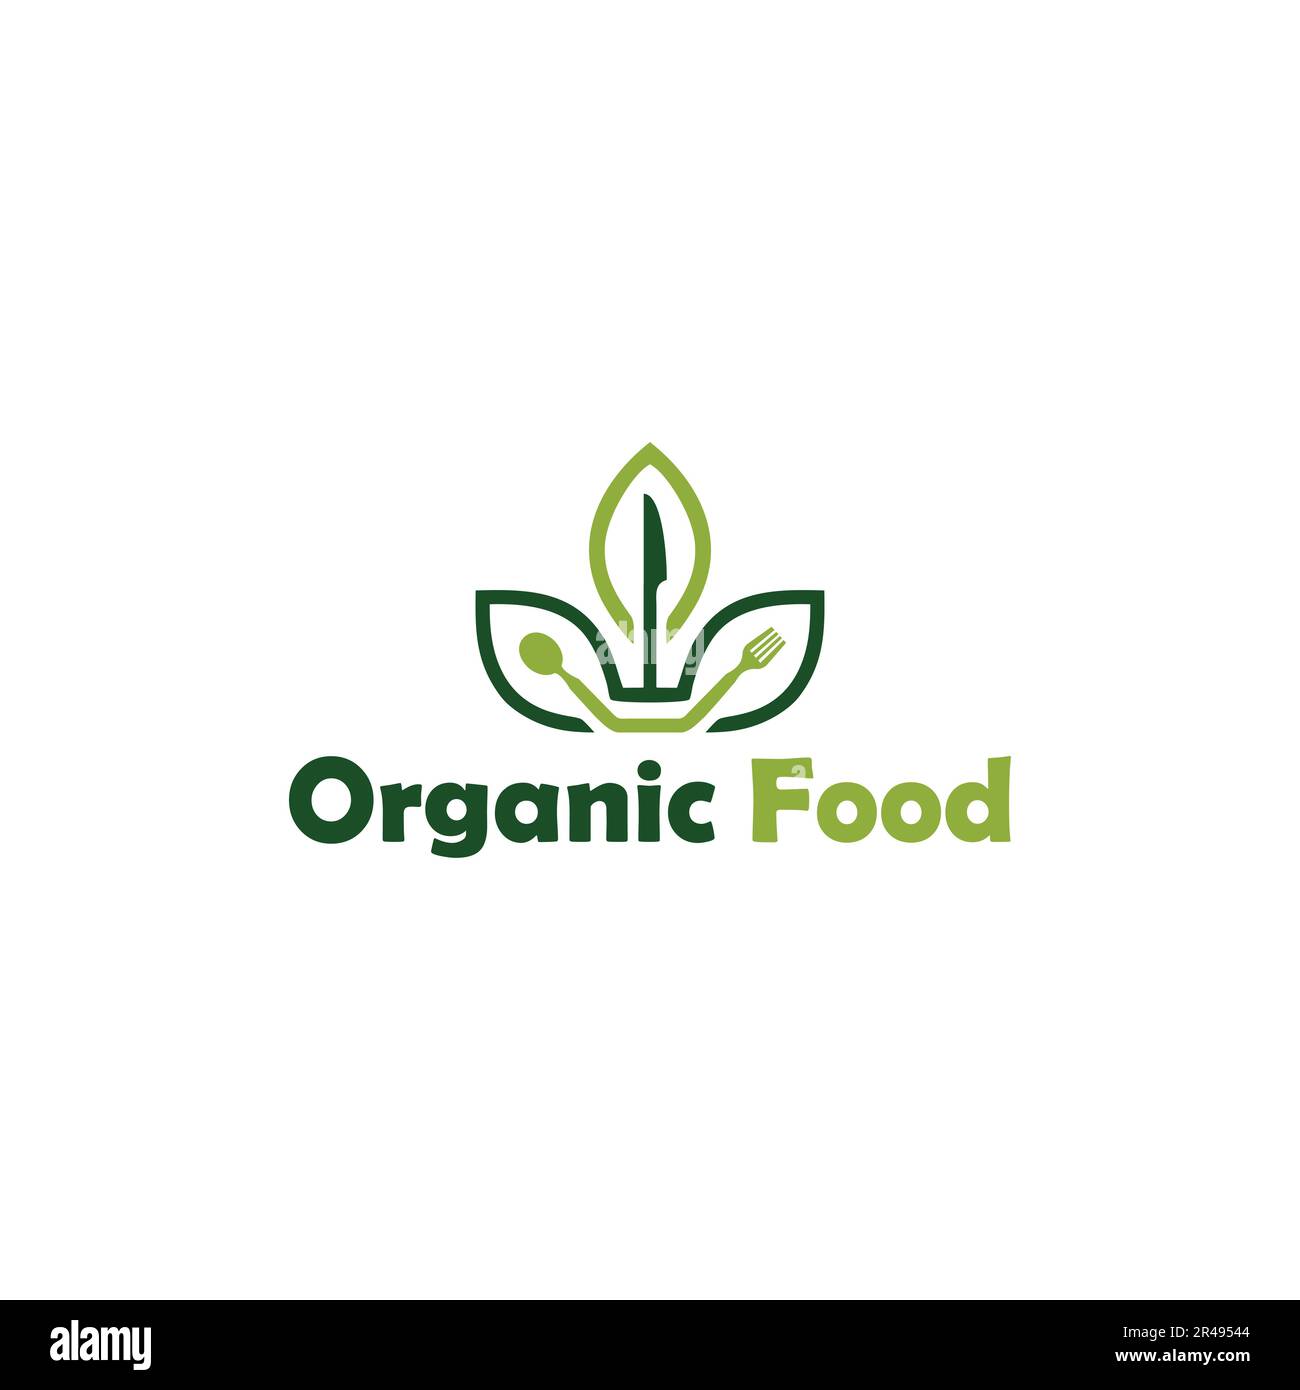 Share more than 142 organic food logo